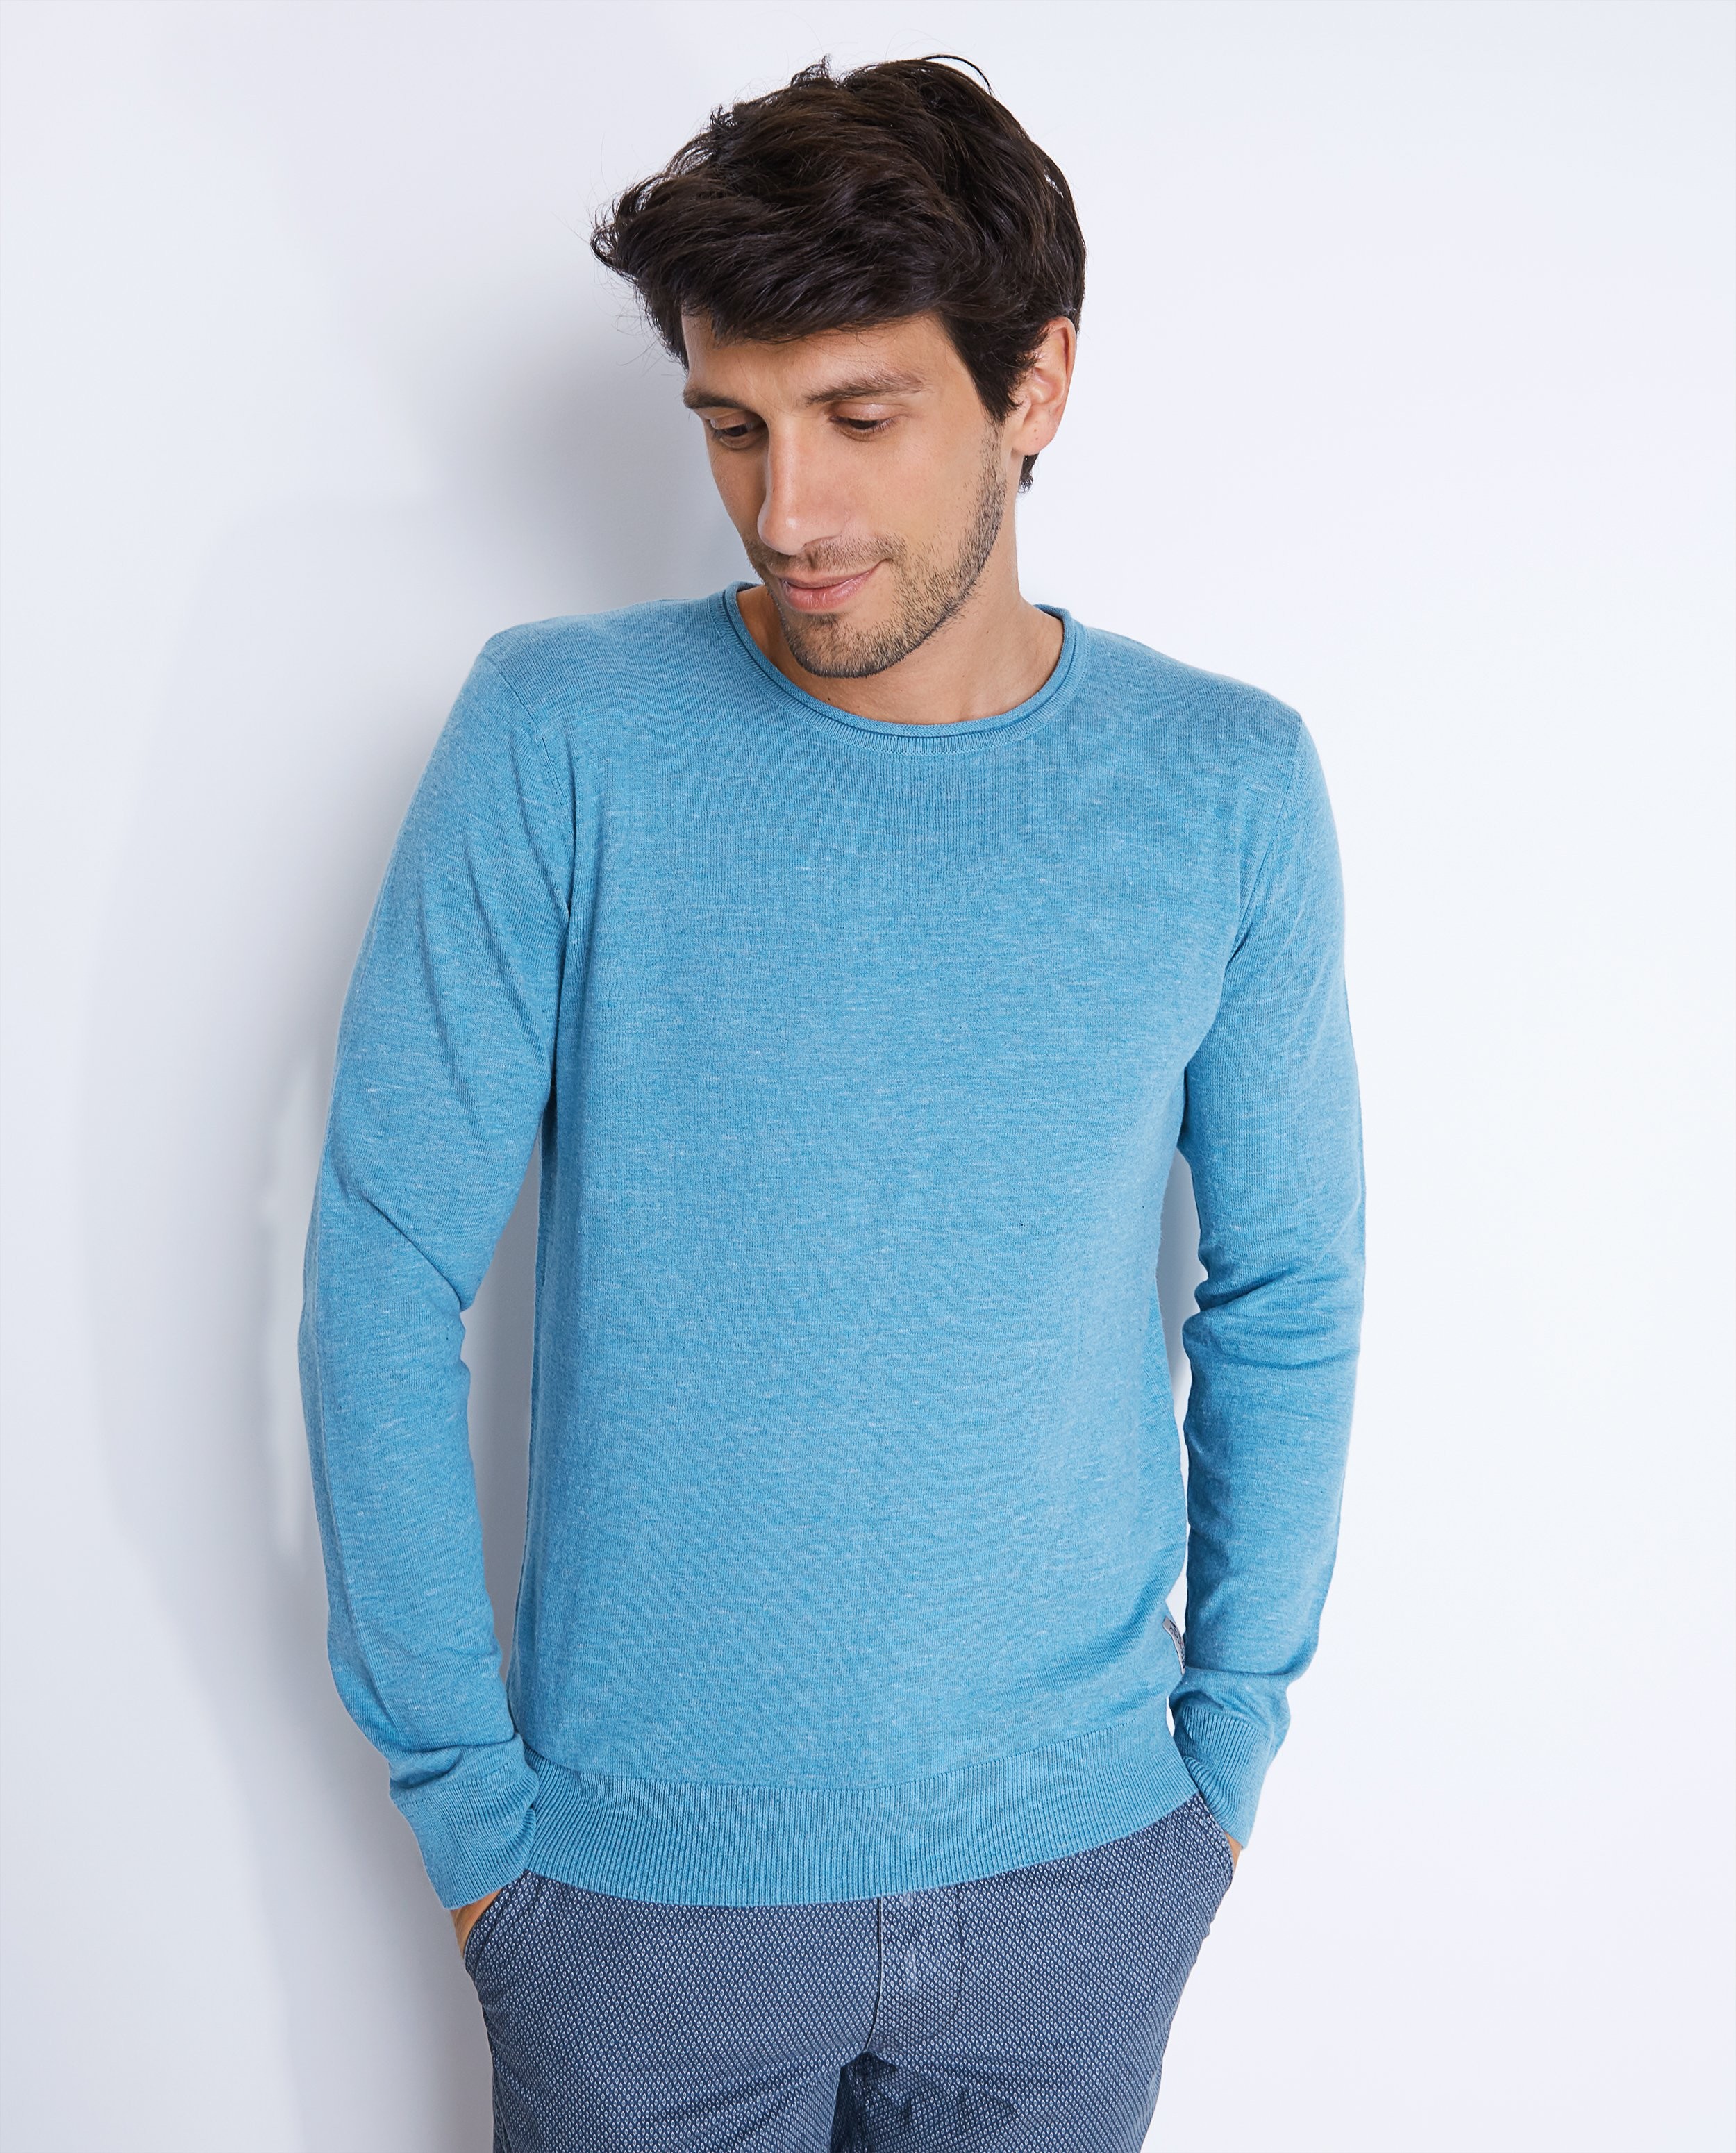 Pulls - Lichtblauwe fijngebreide trui